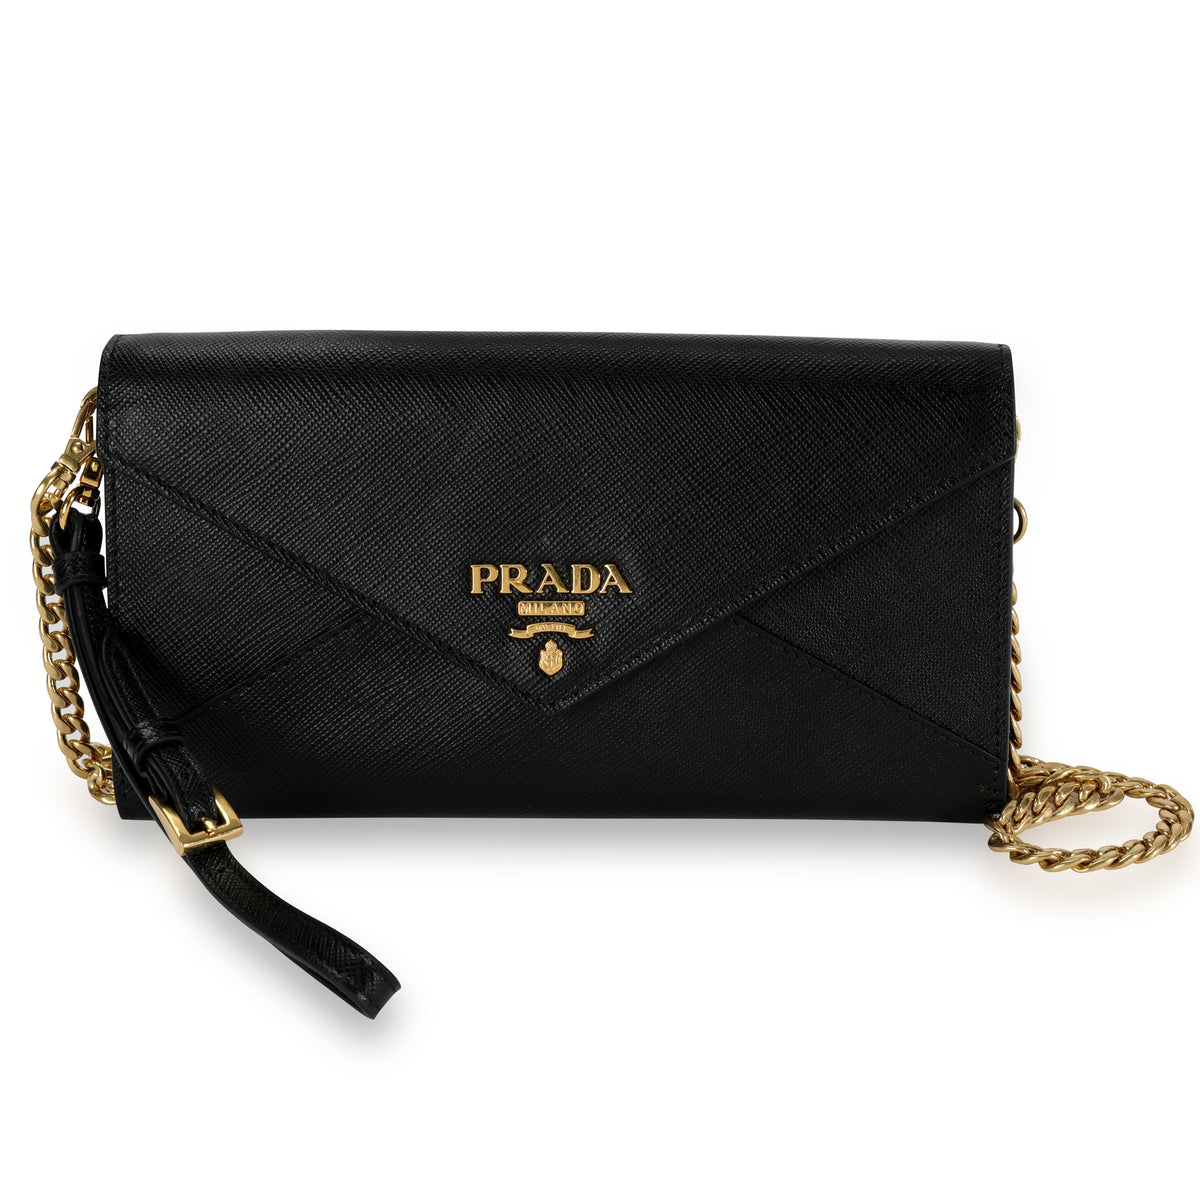 prada wallet on chain black